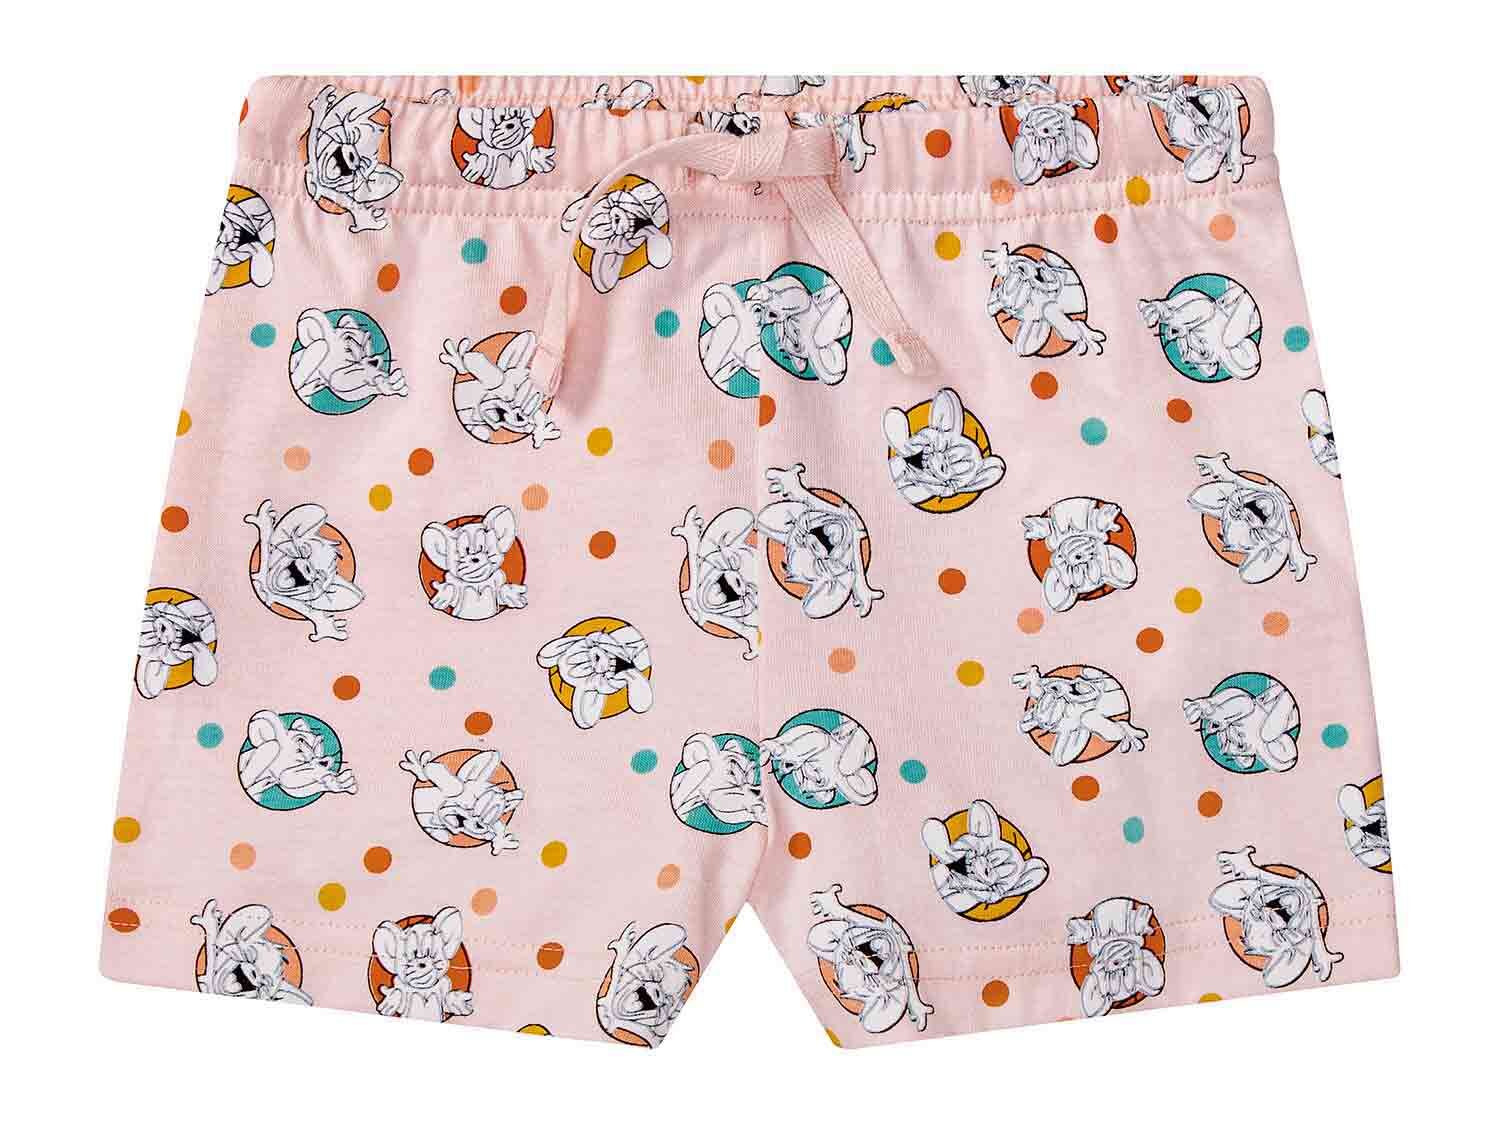 Pantalón corto de pijama infantil Tom & Jerry